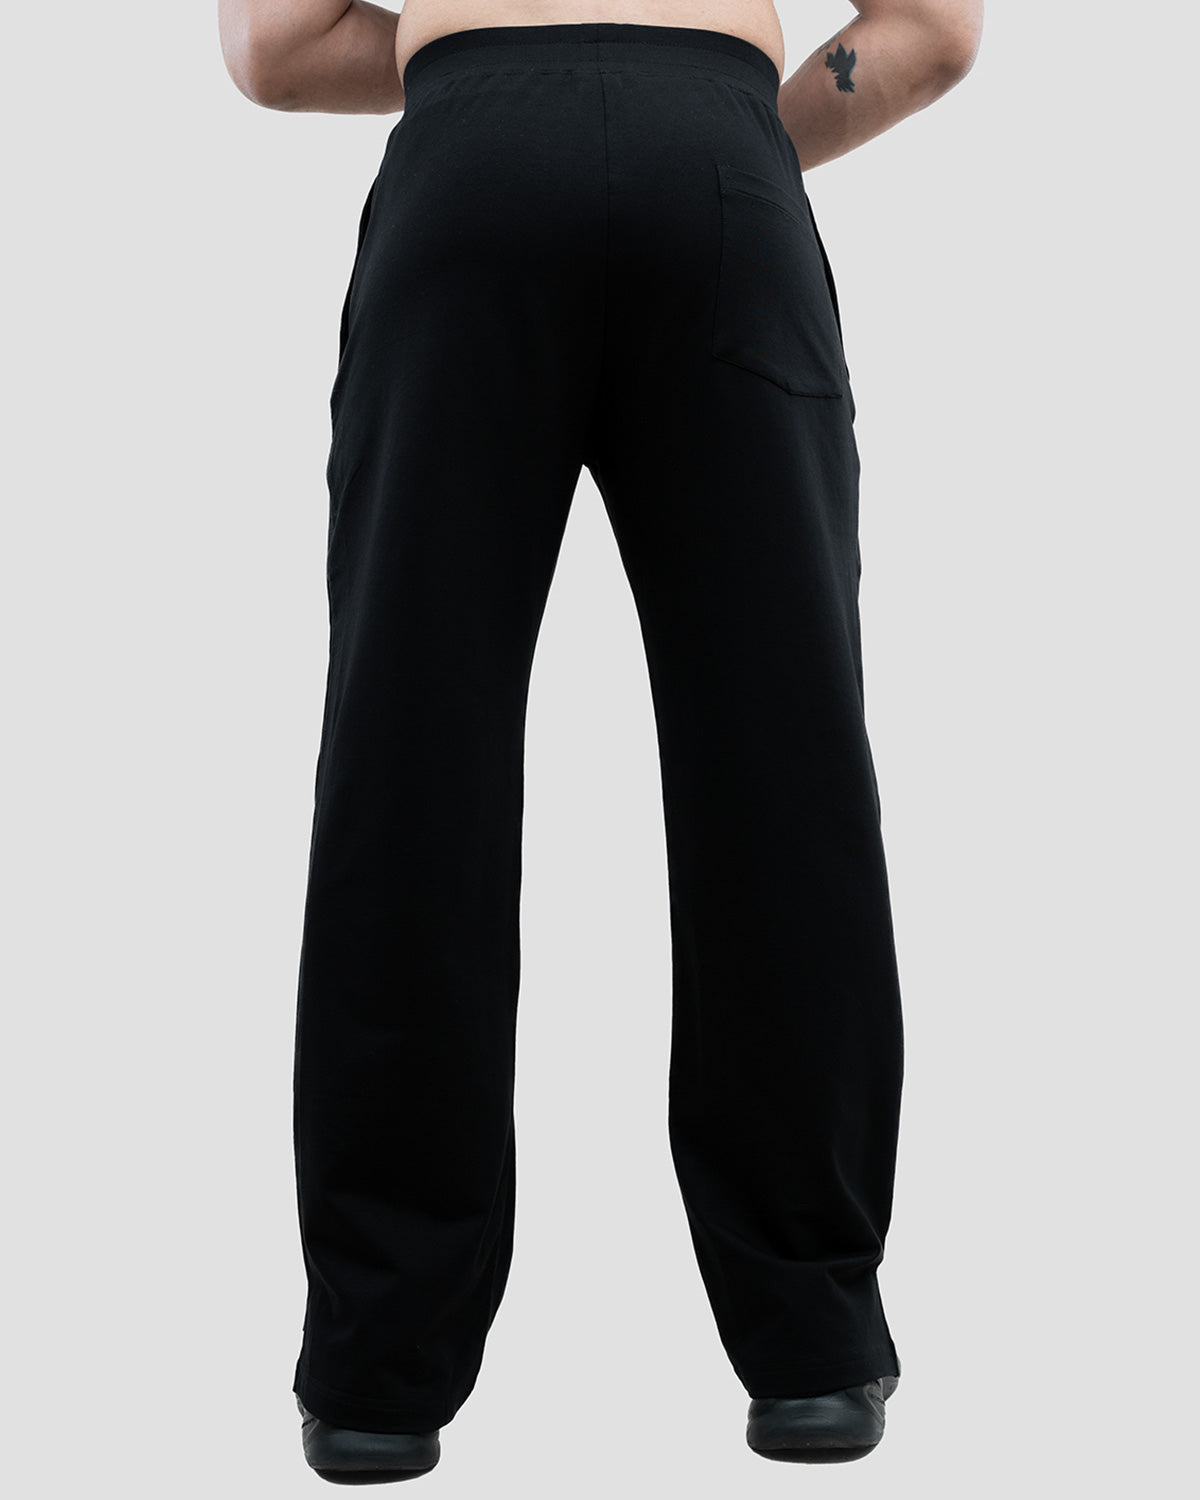 Classic Workout Pants (Black)